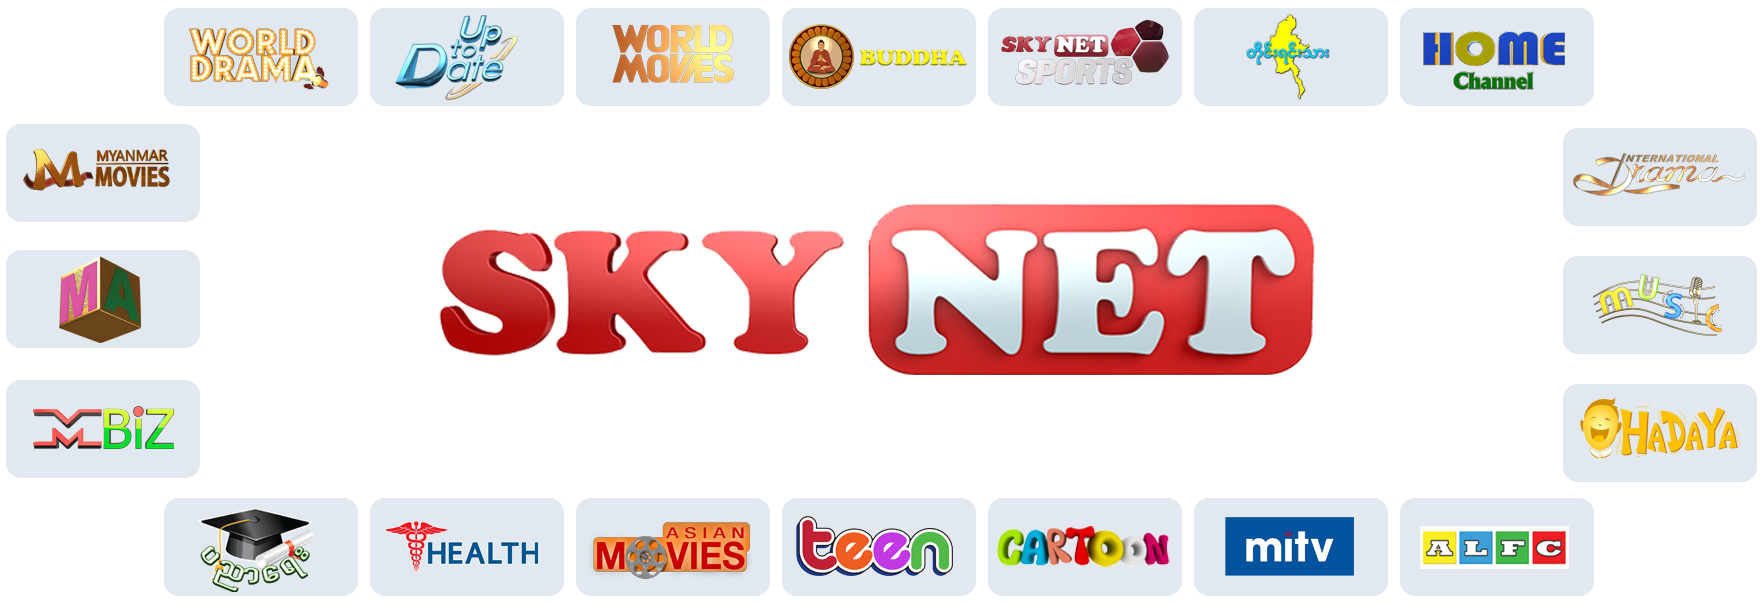 Skynet Featured Channel Logos